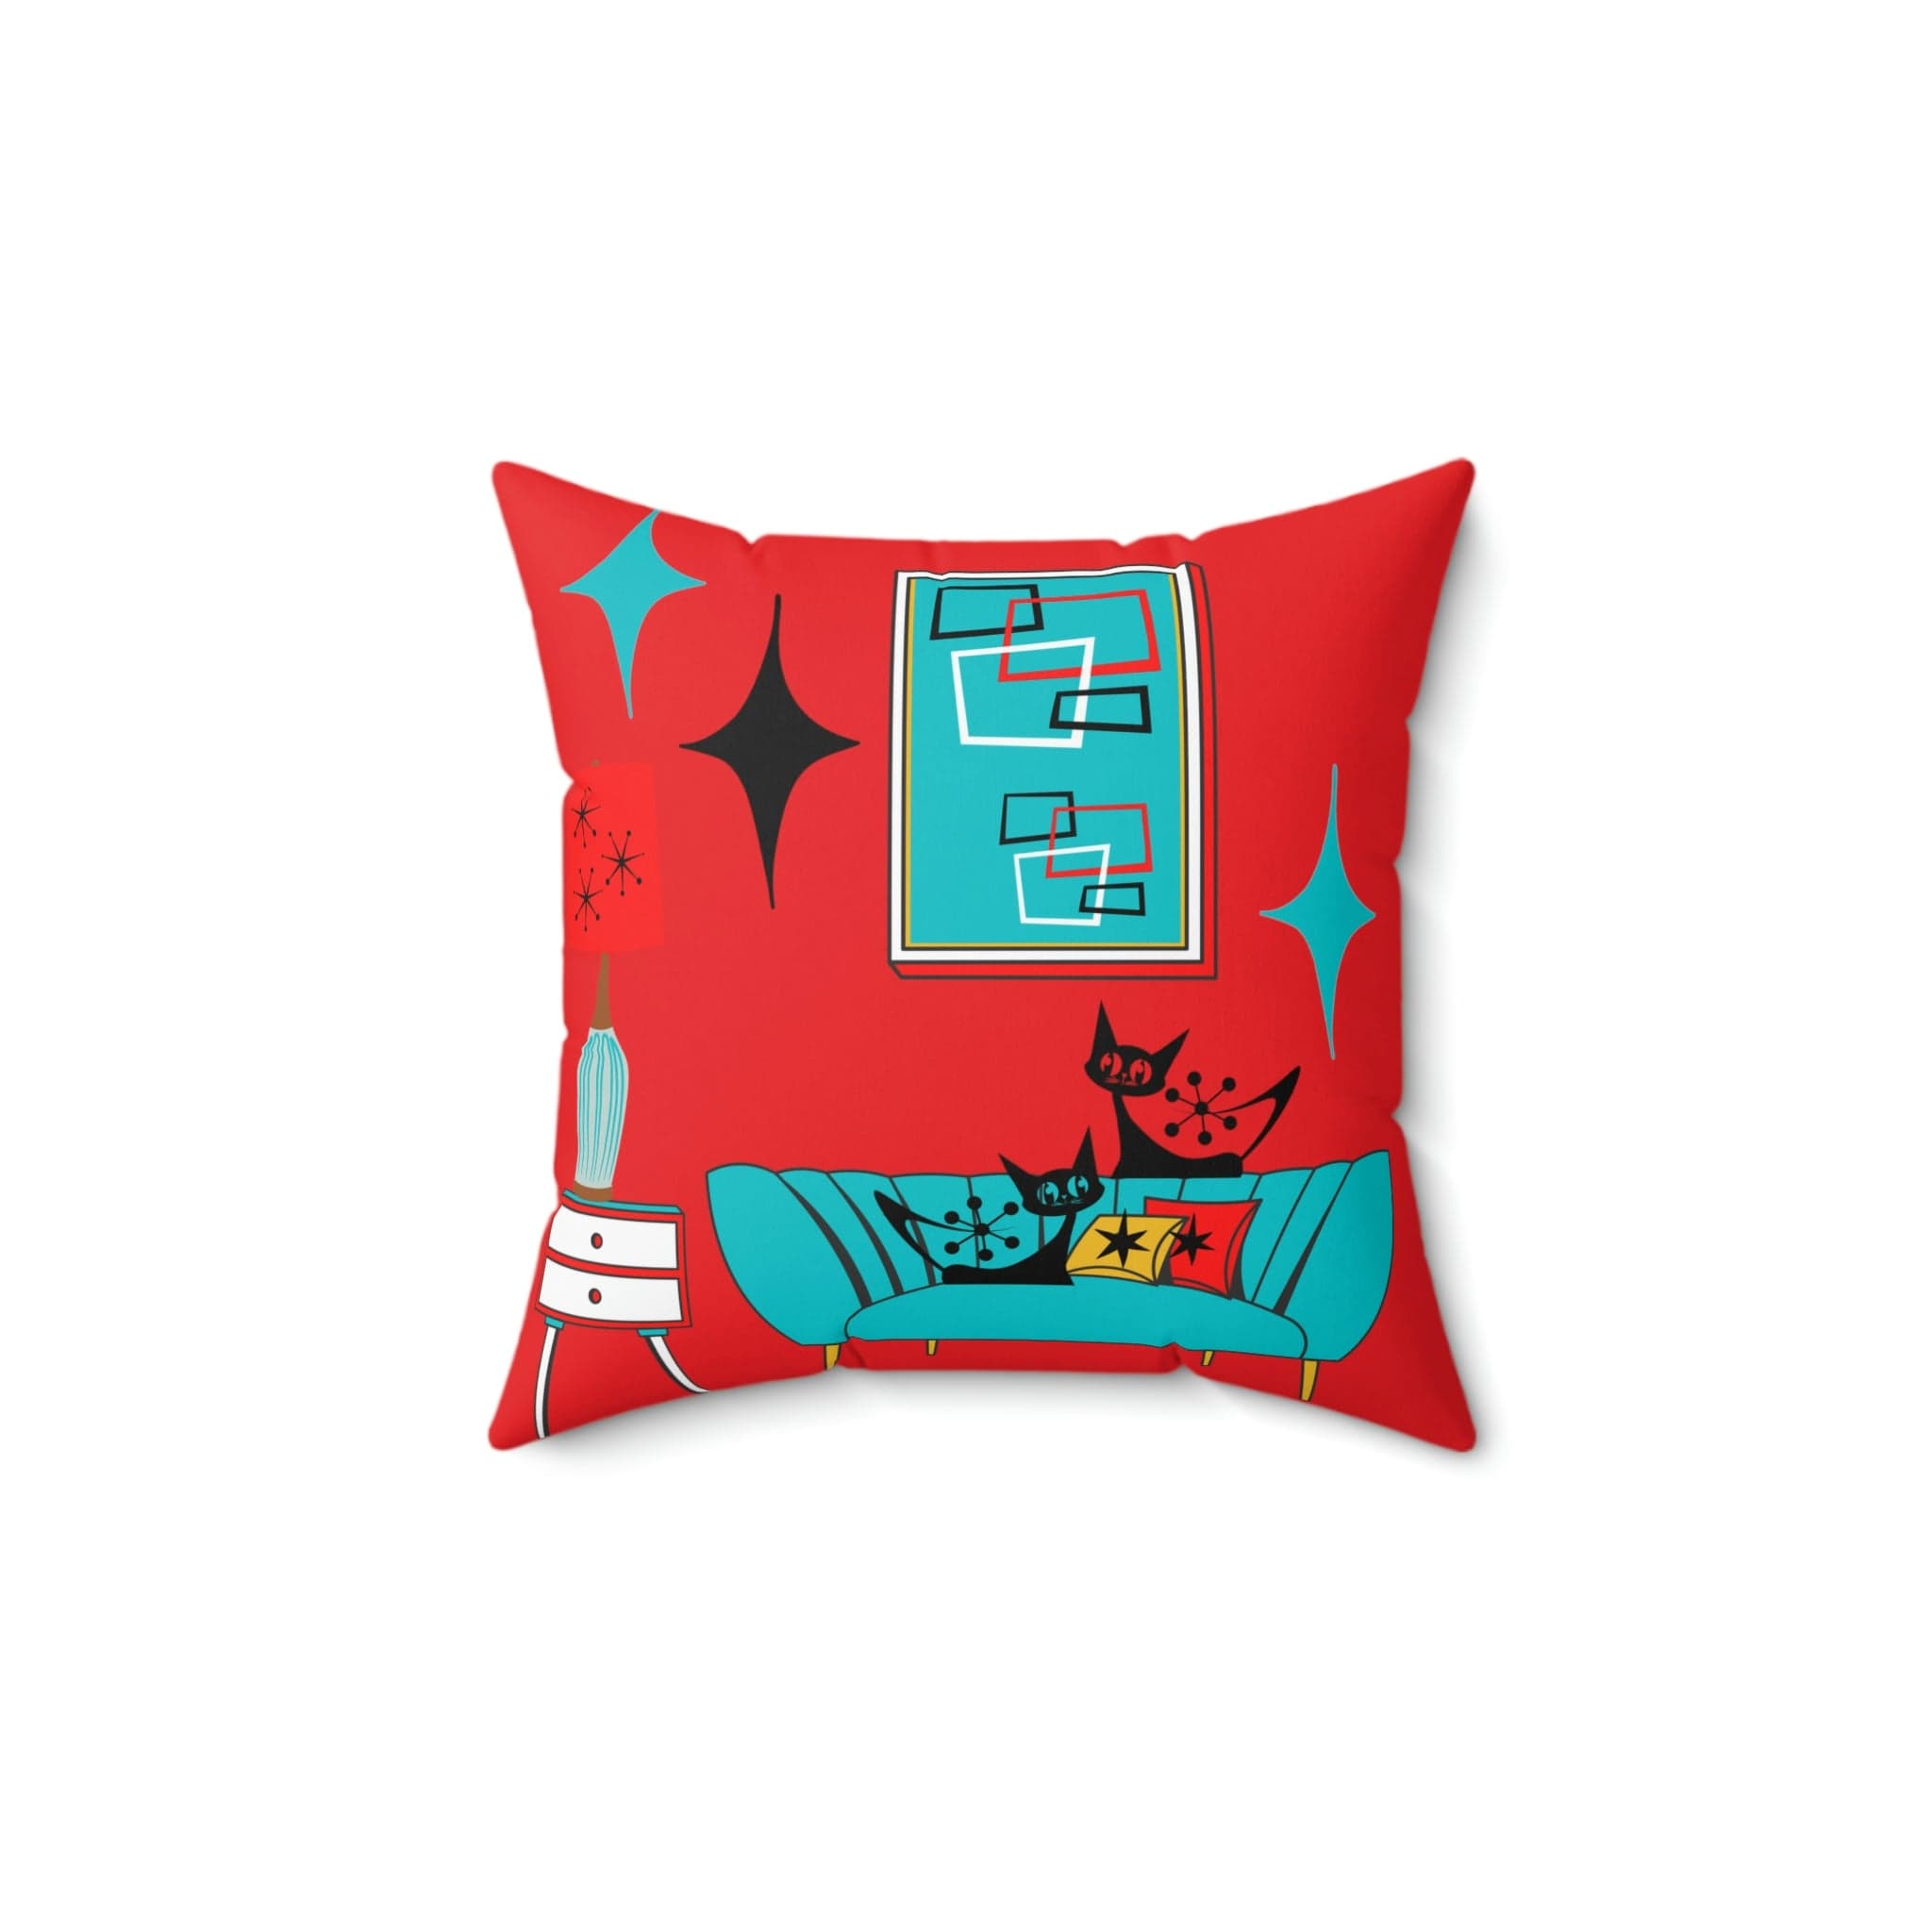 Atomic Cat, Sputnik Red, Aqua Blue, Mid Century Modern Pillow And Insert Home Decor